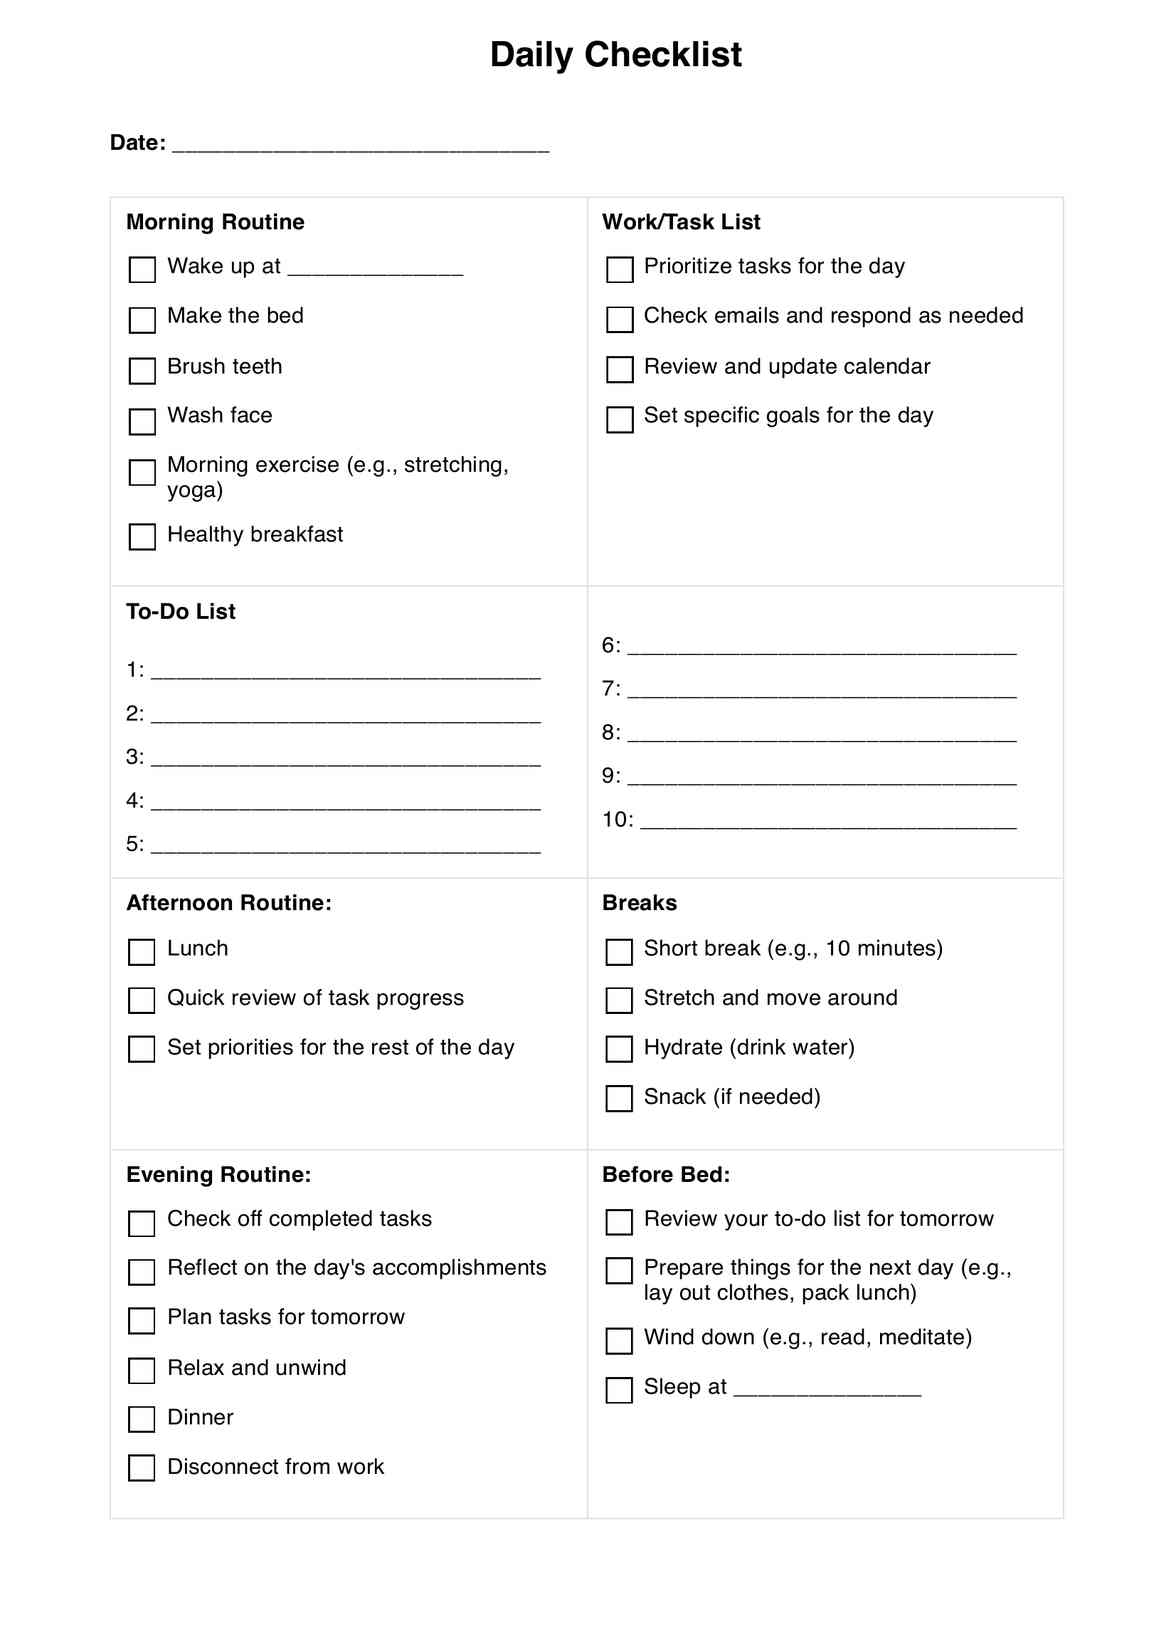 Daily Checklist PDF Example